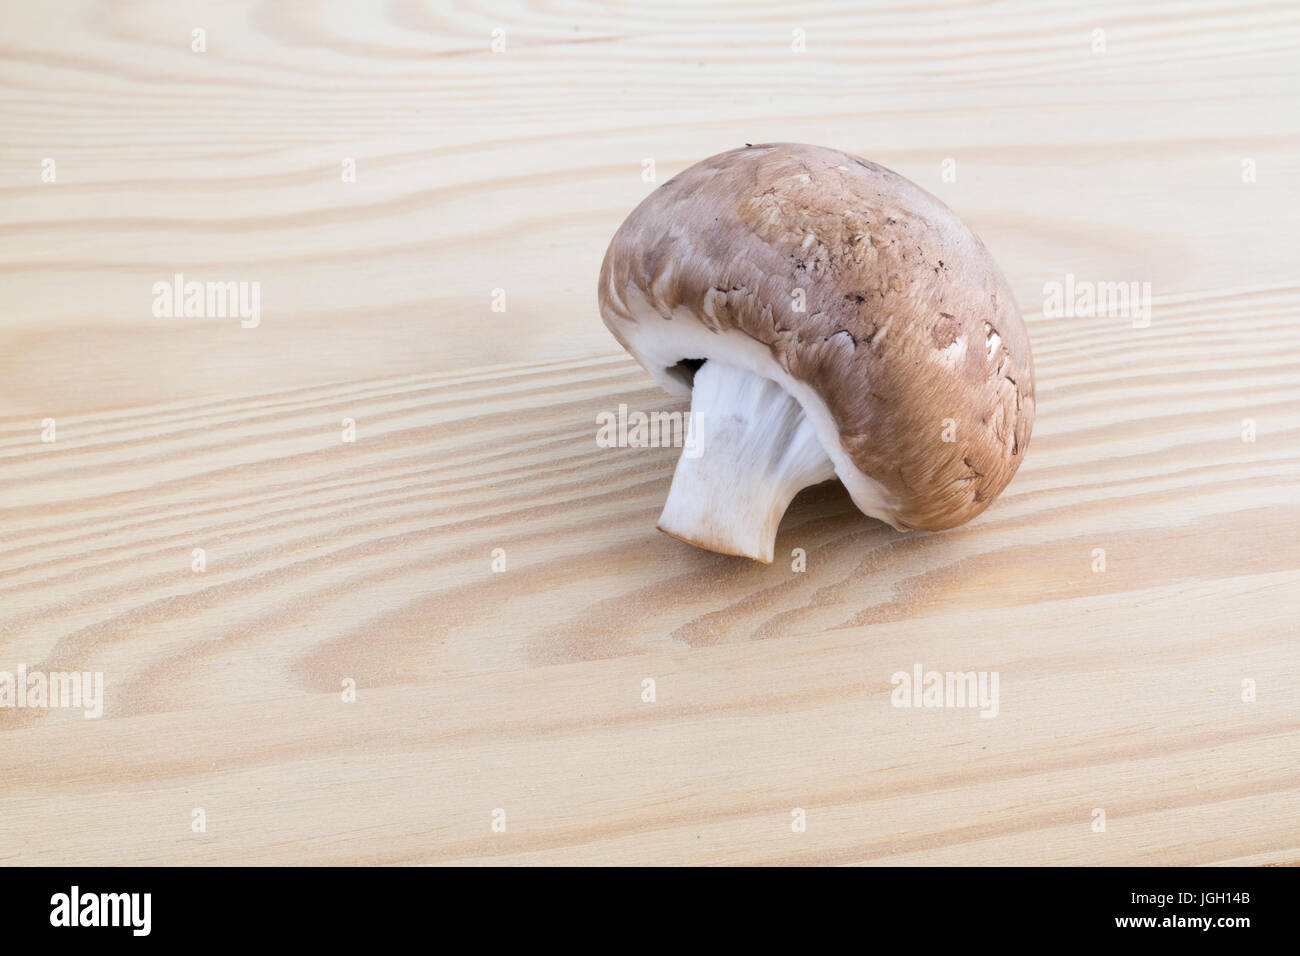 Chestnut mushroom on wooden cutting board Stock Photo